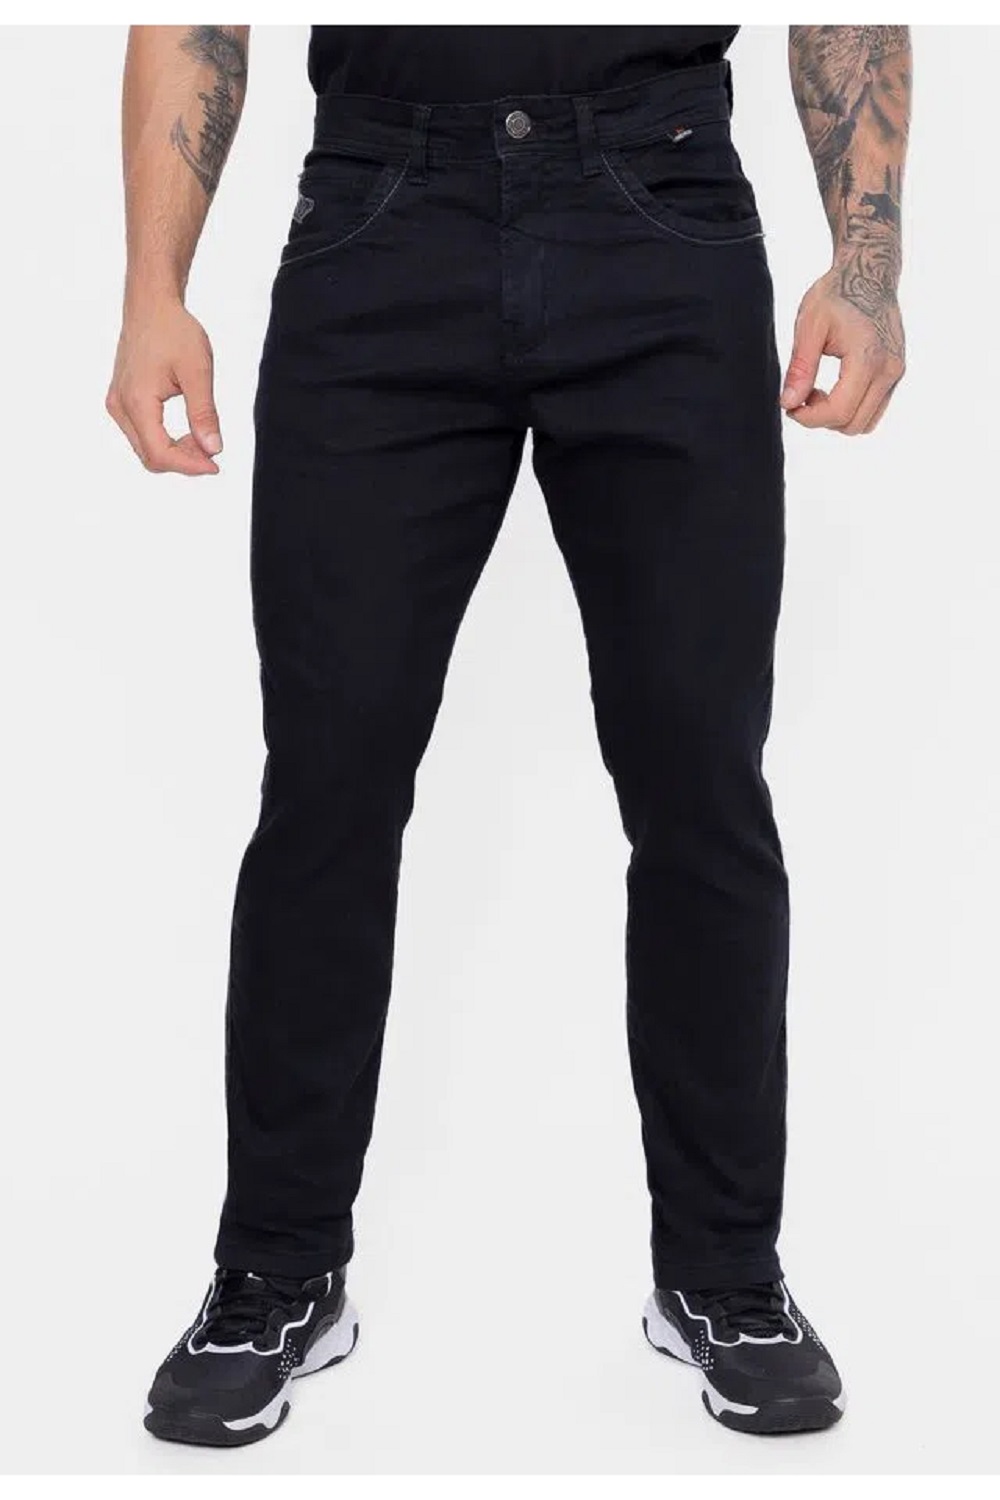 Calca Jeans Masc 31-D576 T